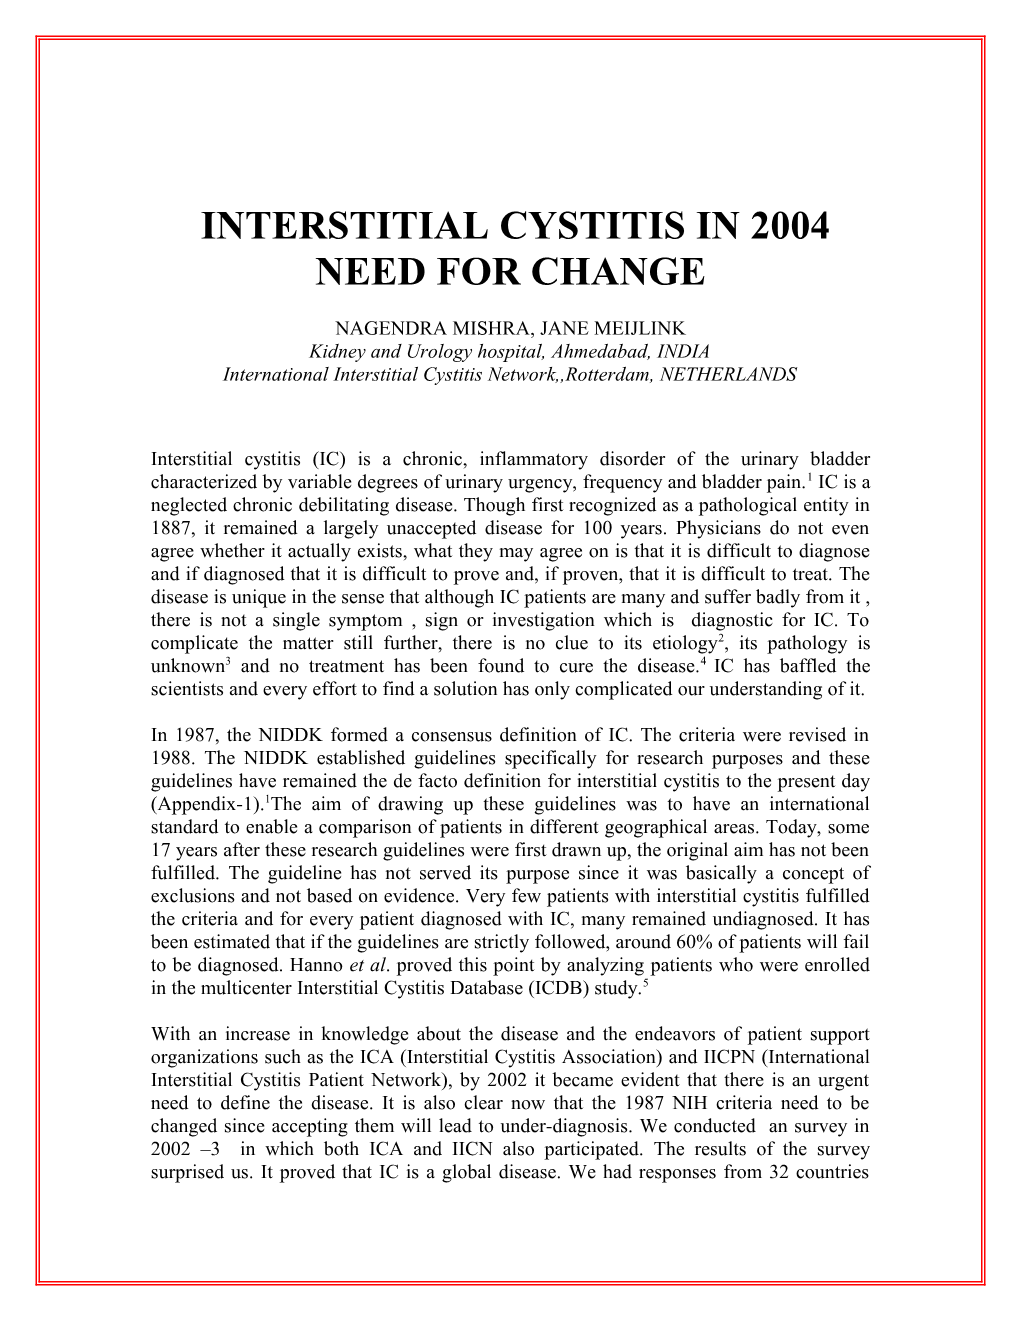 International Survey on Interstitial Cystitis